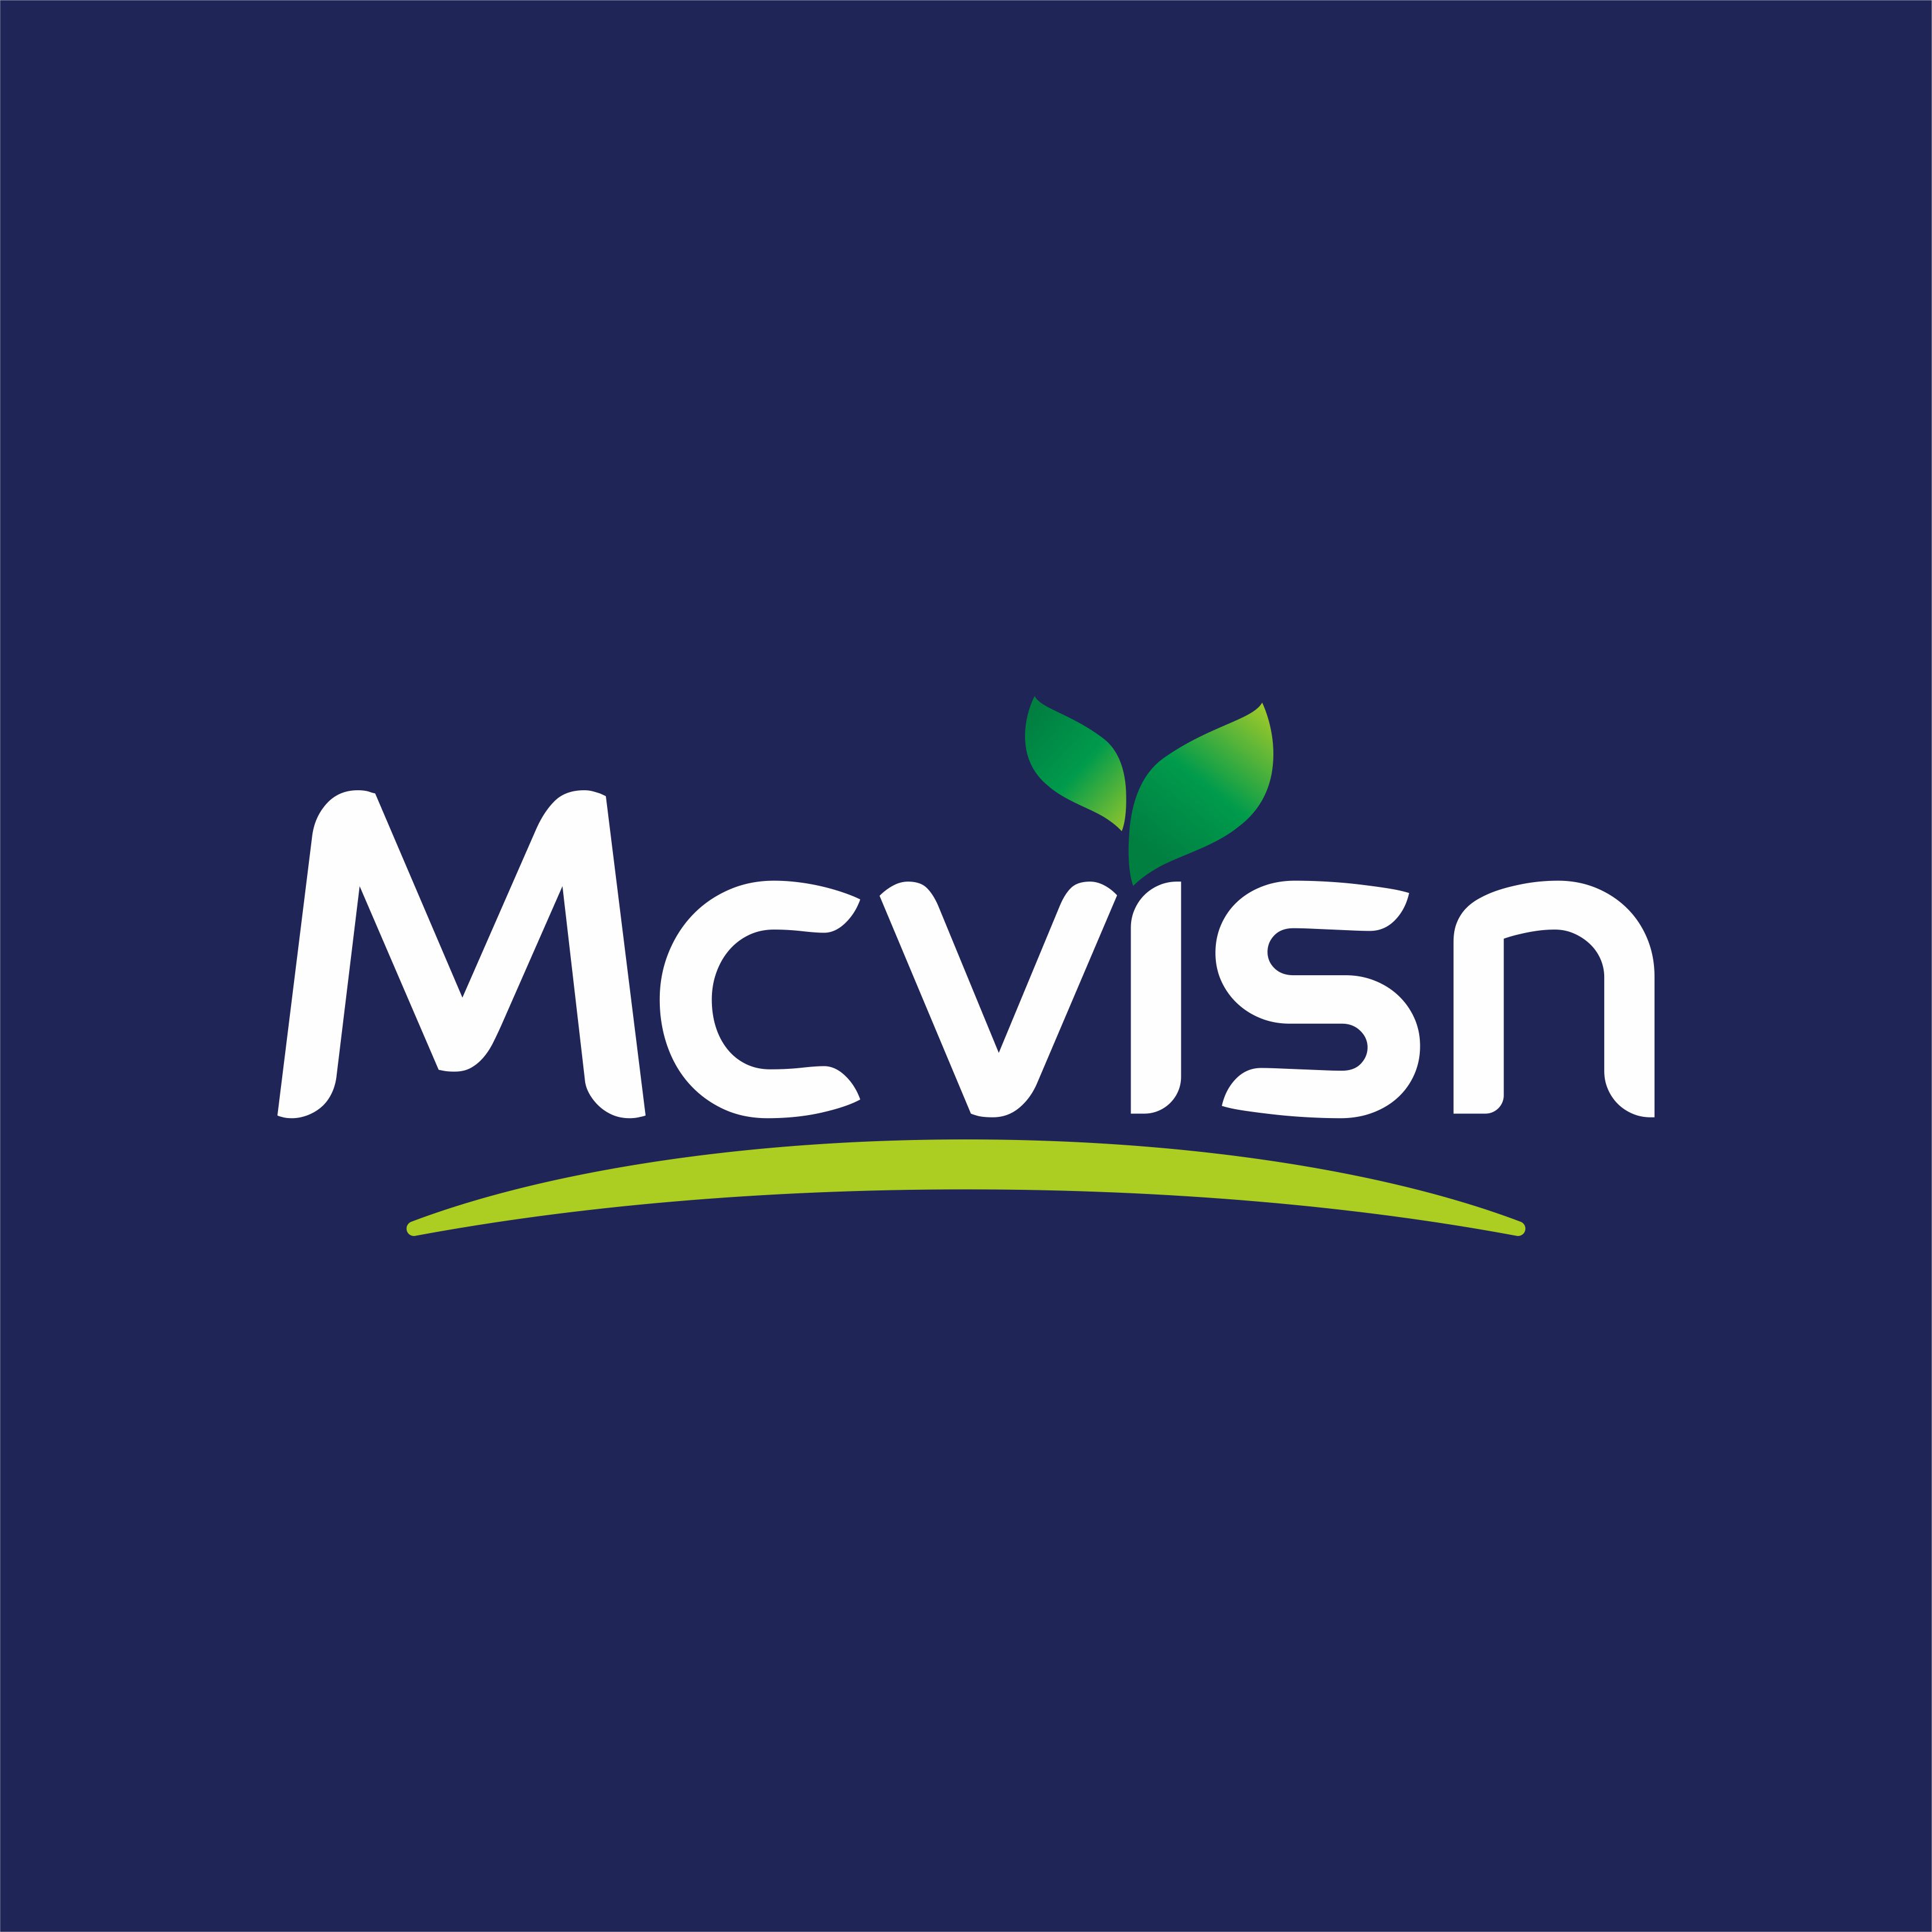 Mcvisn益生菌可以帮助维持肠道健康，增强免疫力，改善消化系统